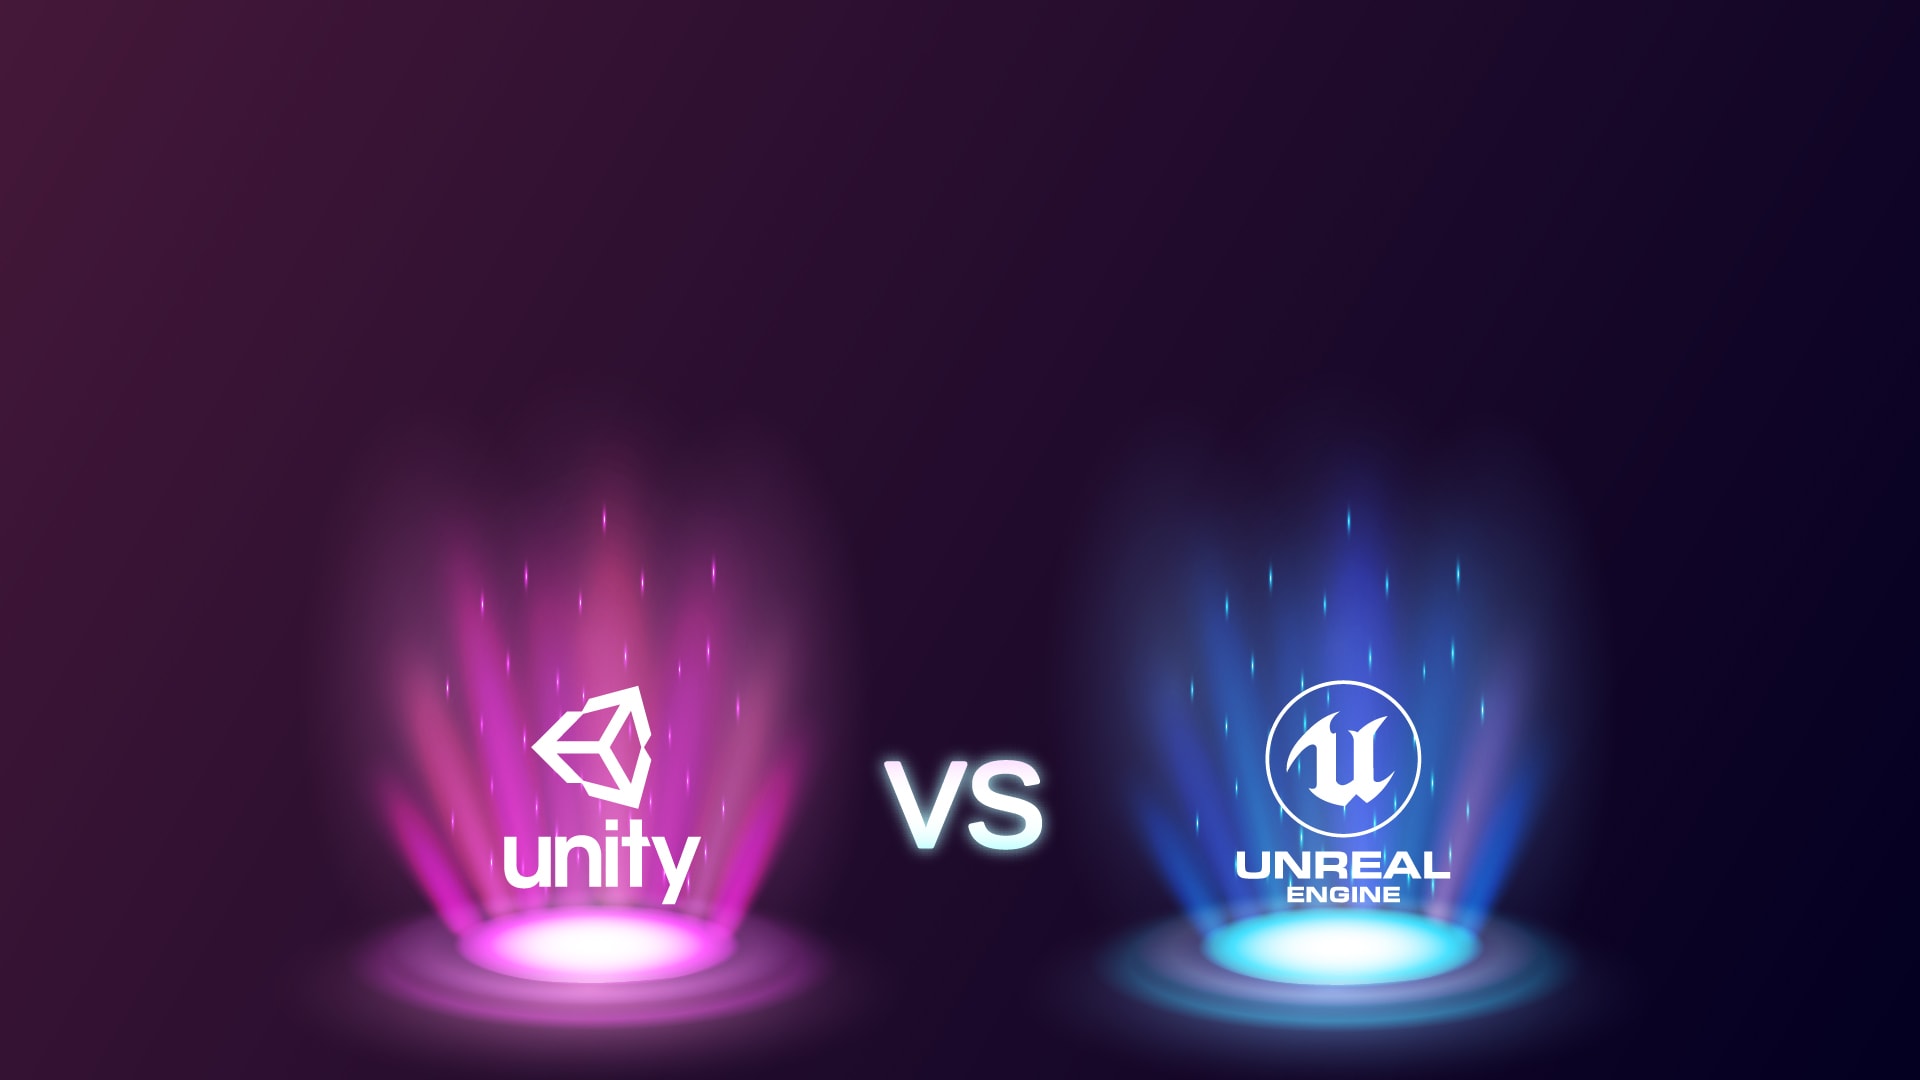 Unity vs Unreal Engine